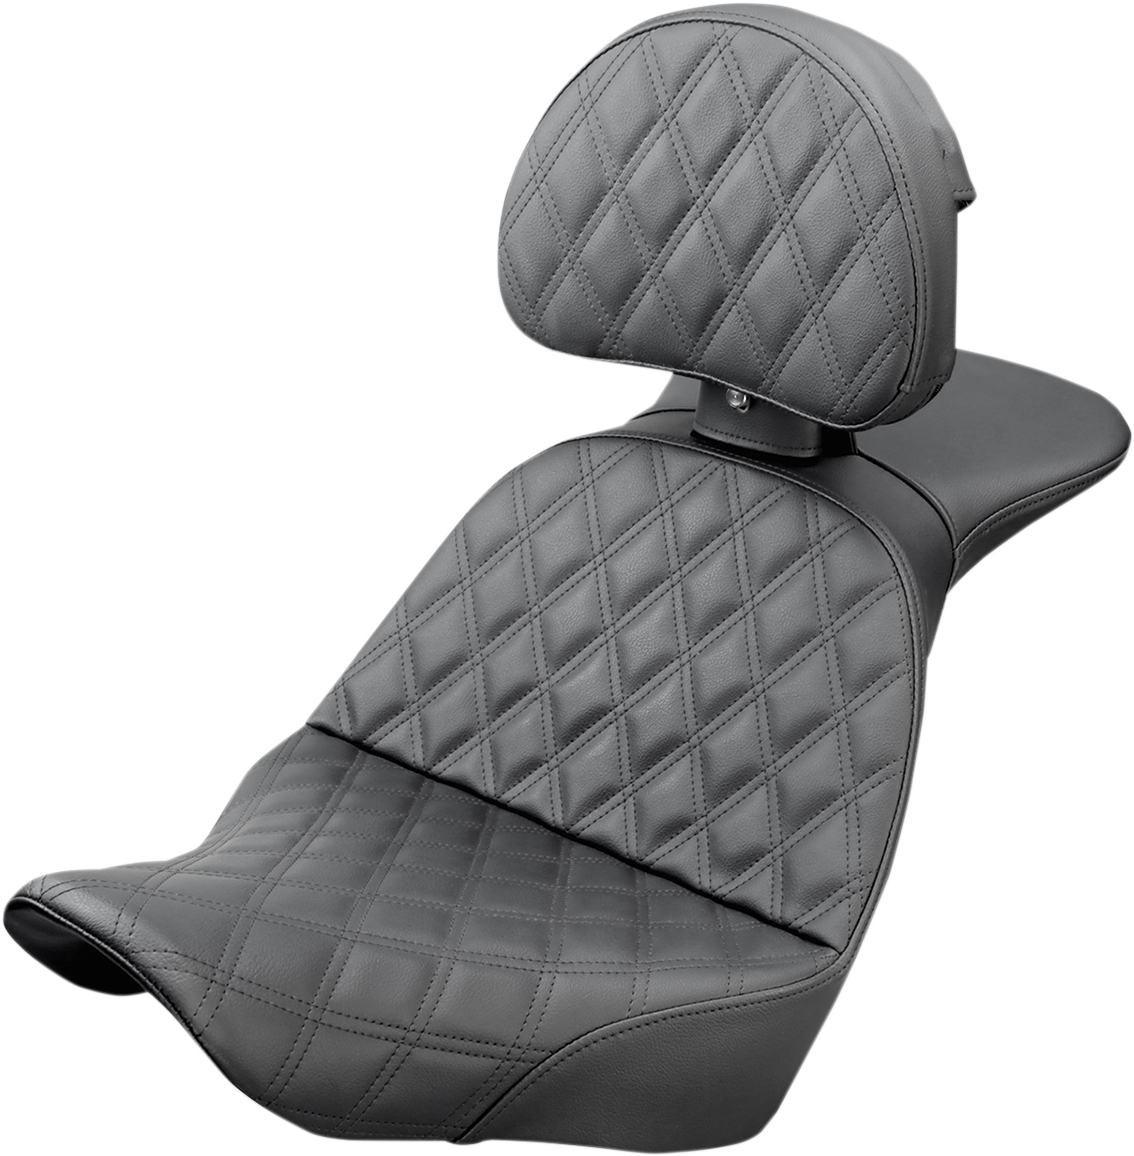 Explorer Seat - Lattice Stitched - Backrest6184576